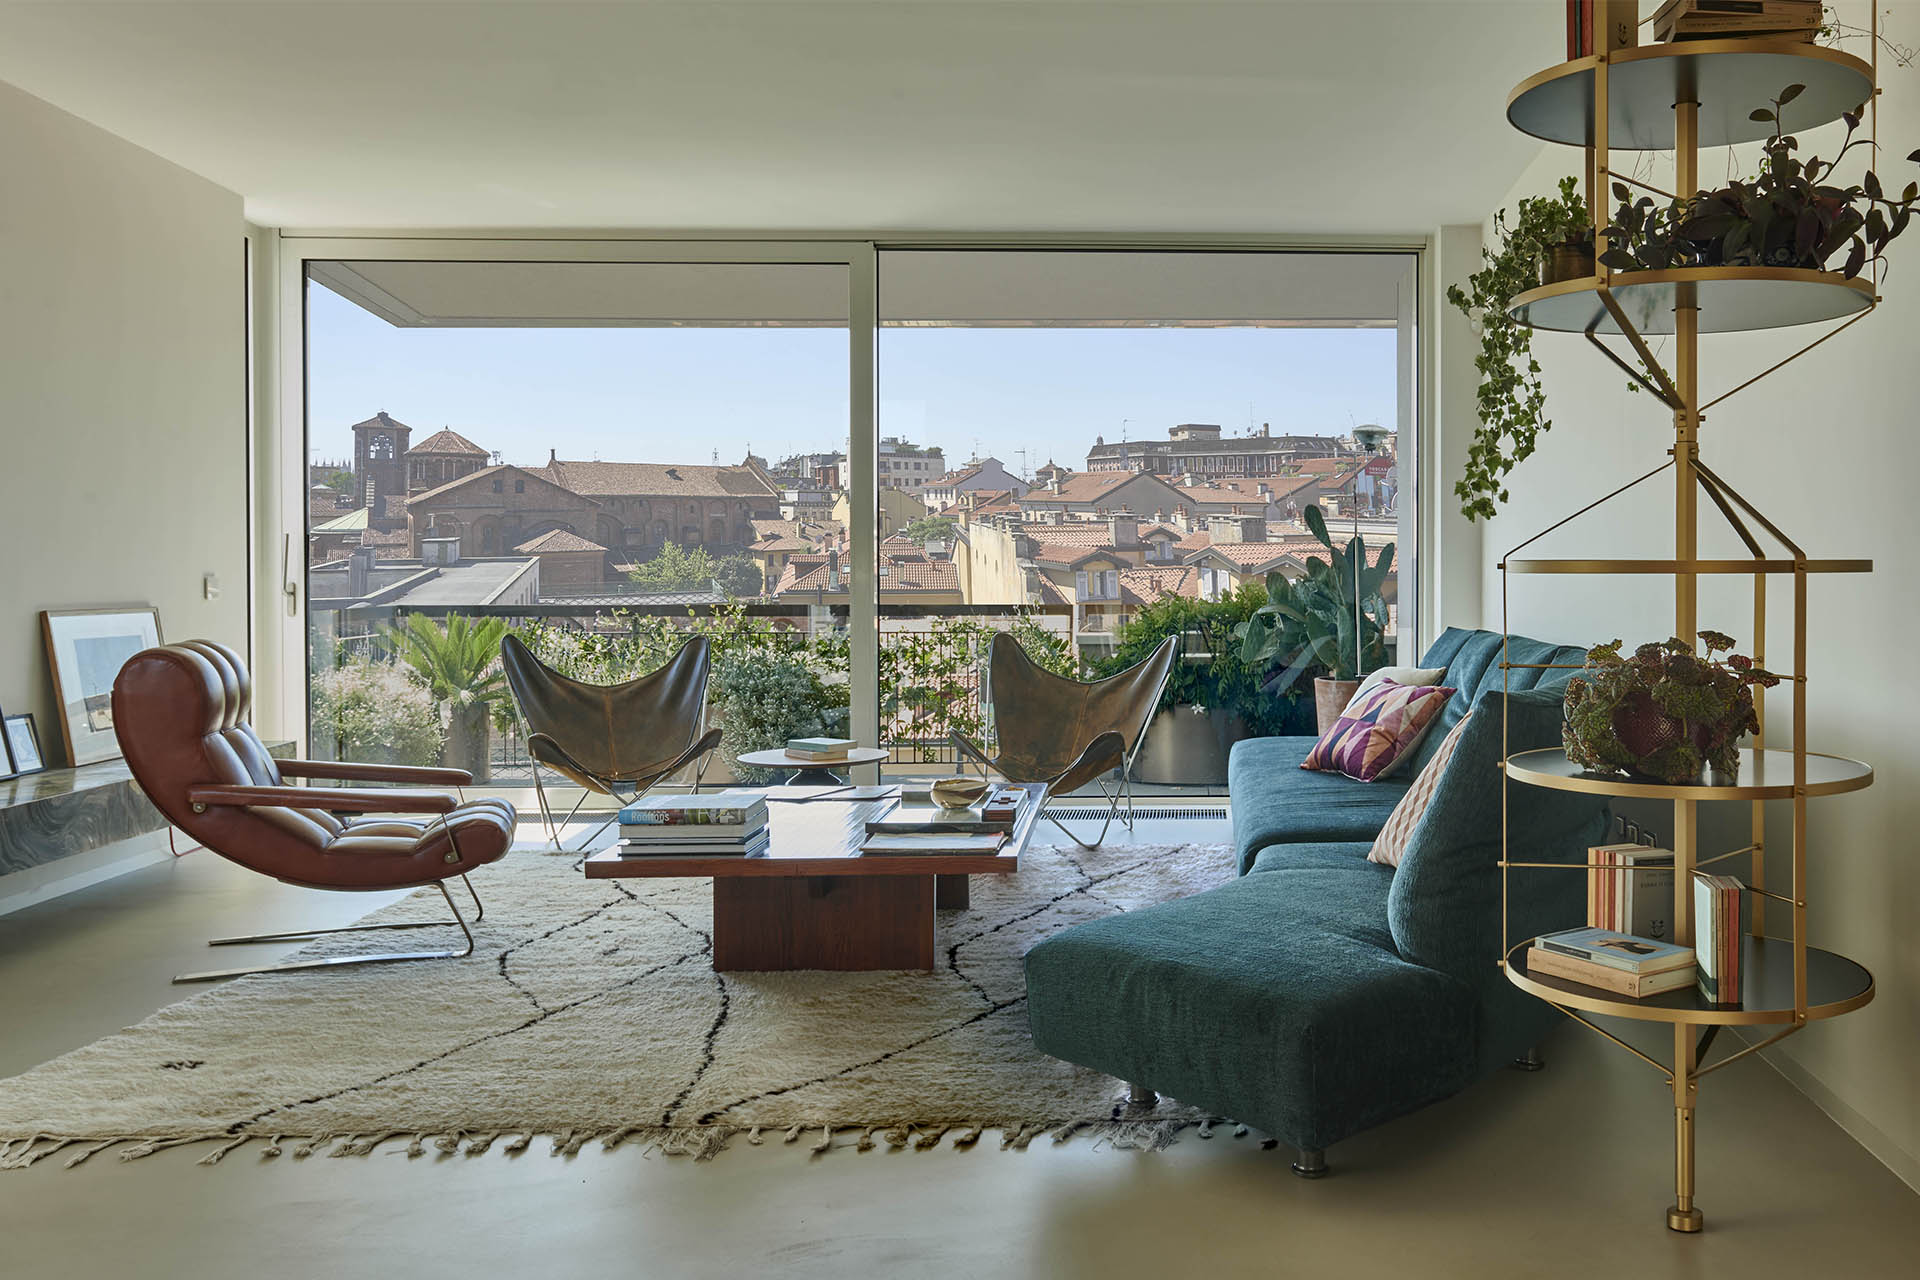 Residential on moodboard. How to design an anti-cliché home according to Carlo Donati Studio